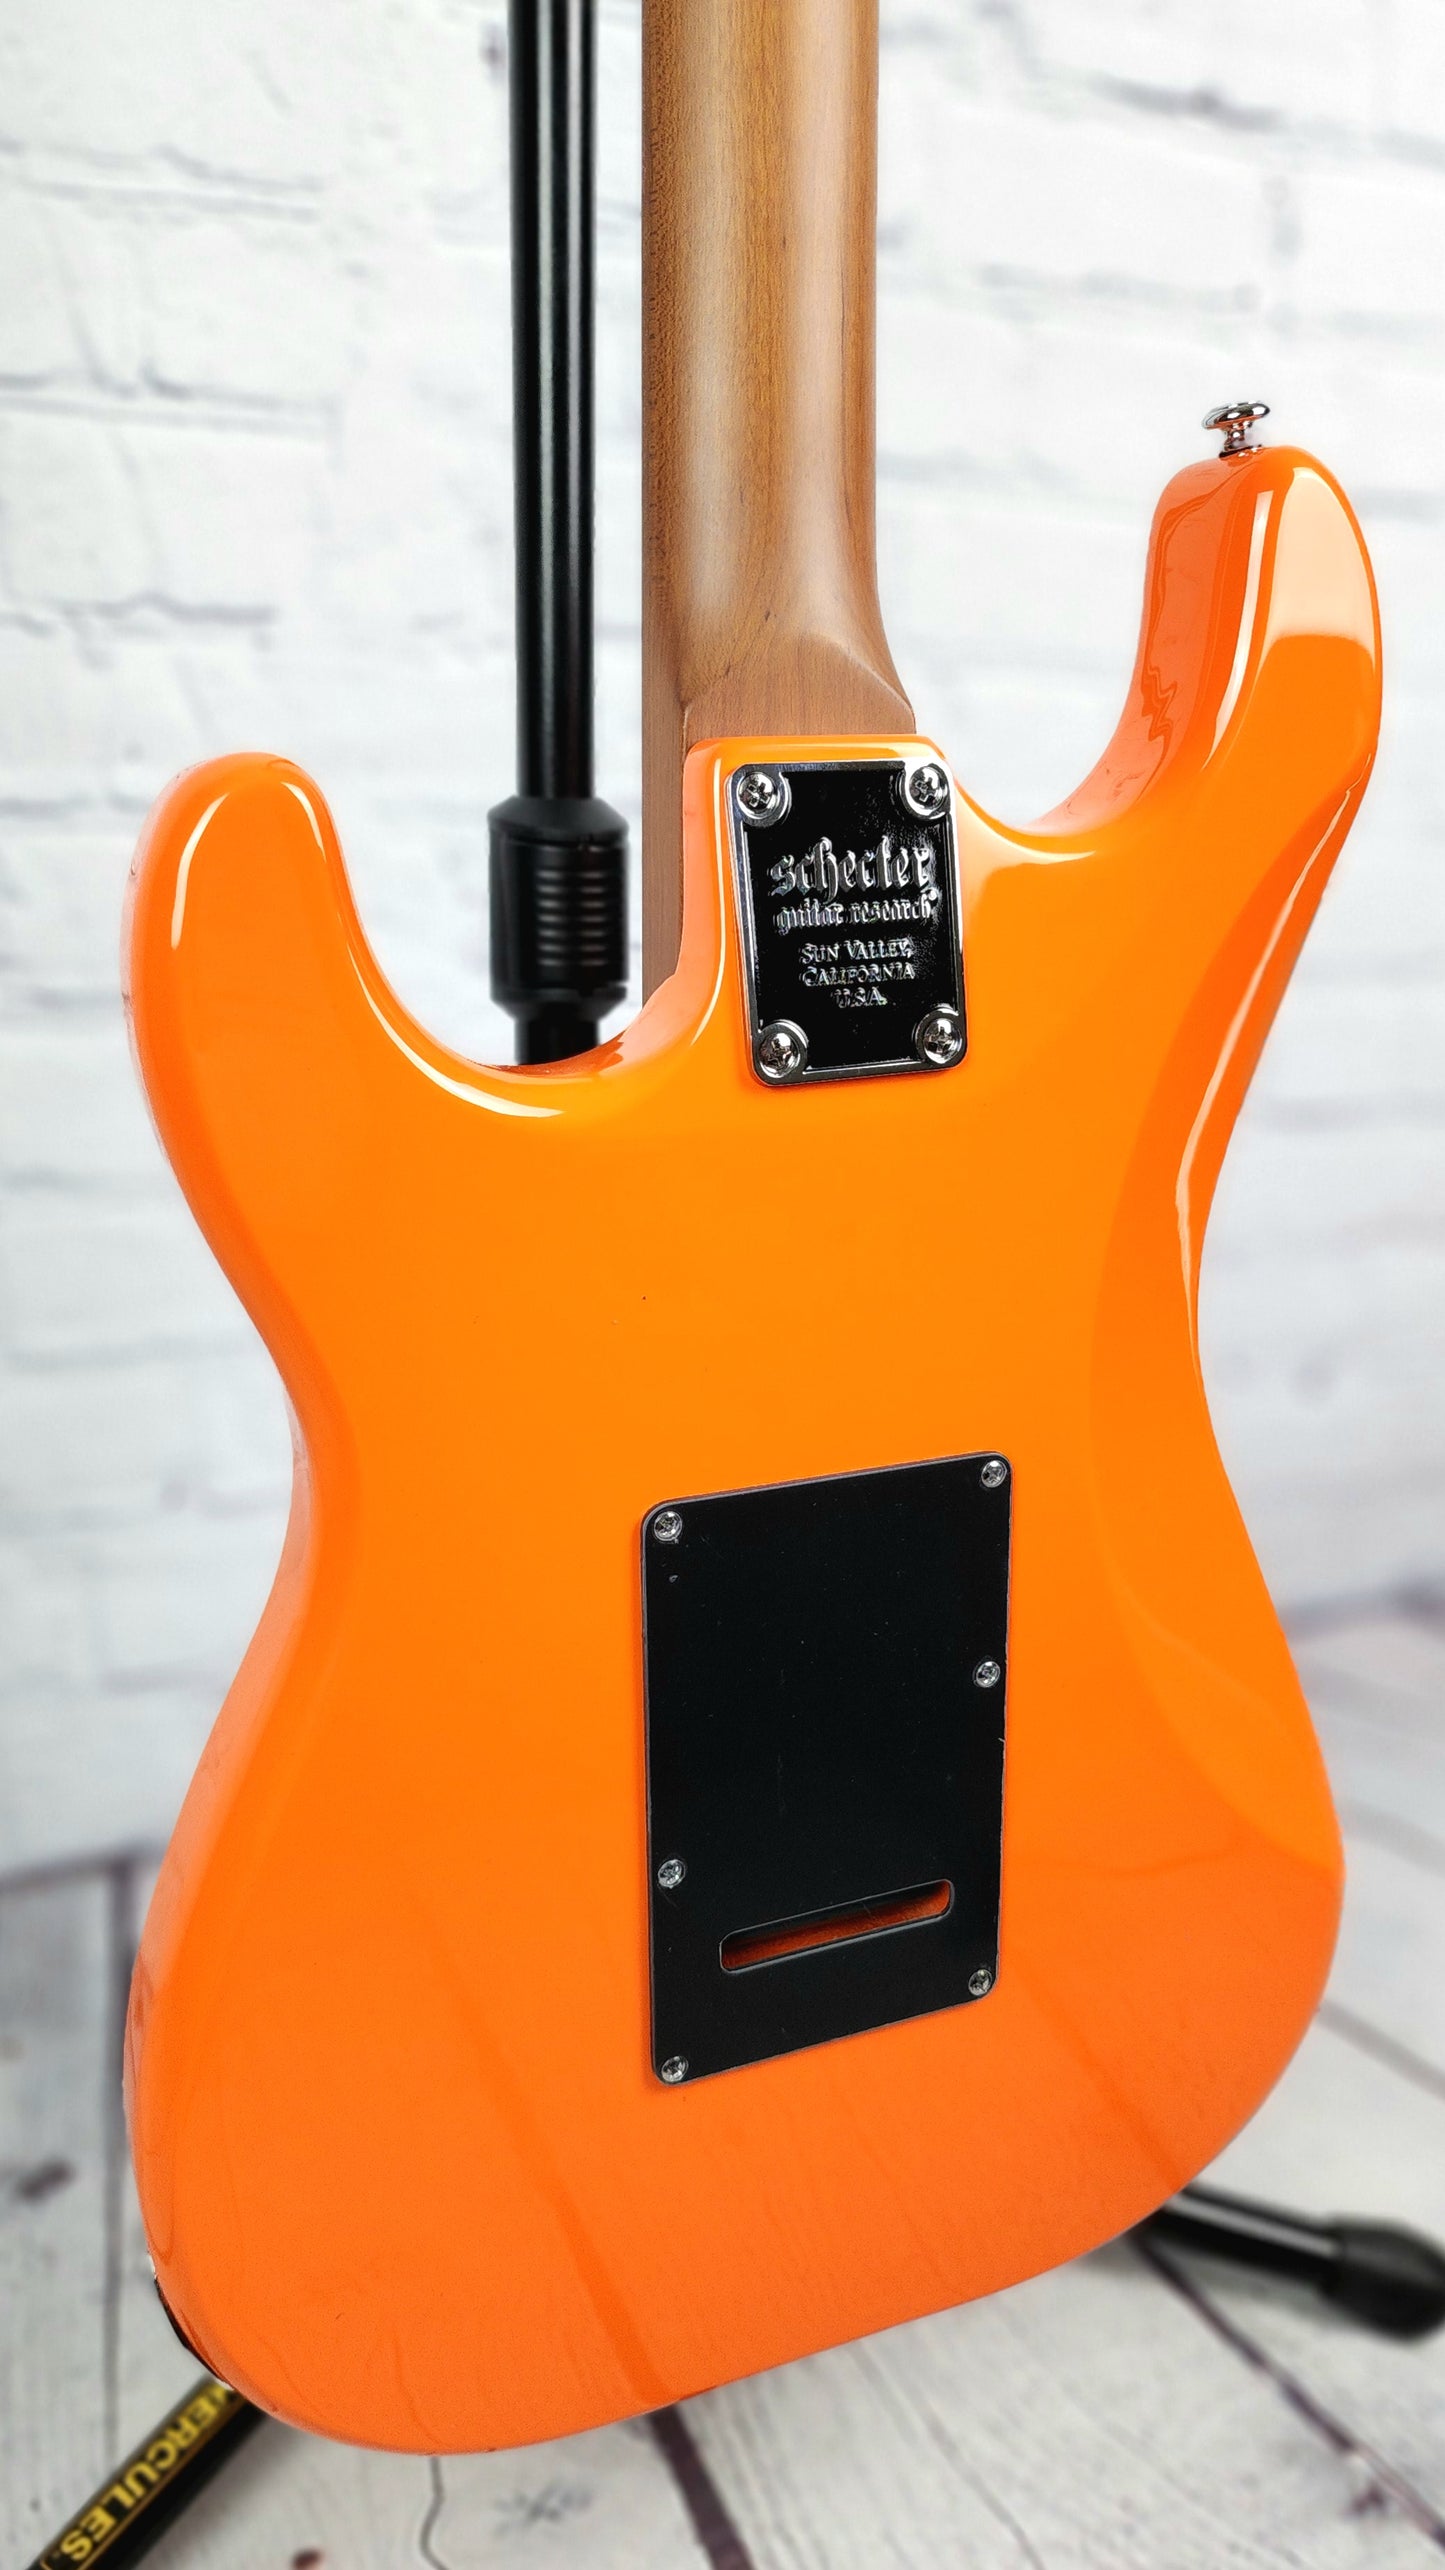 Schecter Guitars Nick Johnston Traditional SSS Electric Guitar Atomic Orange